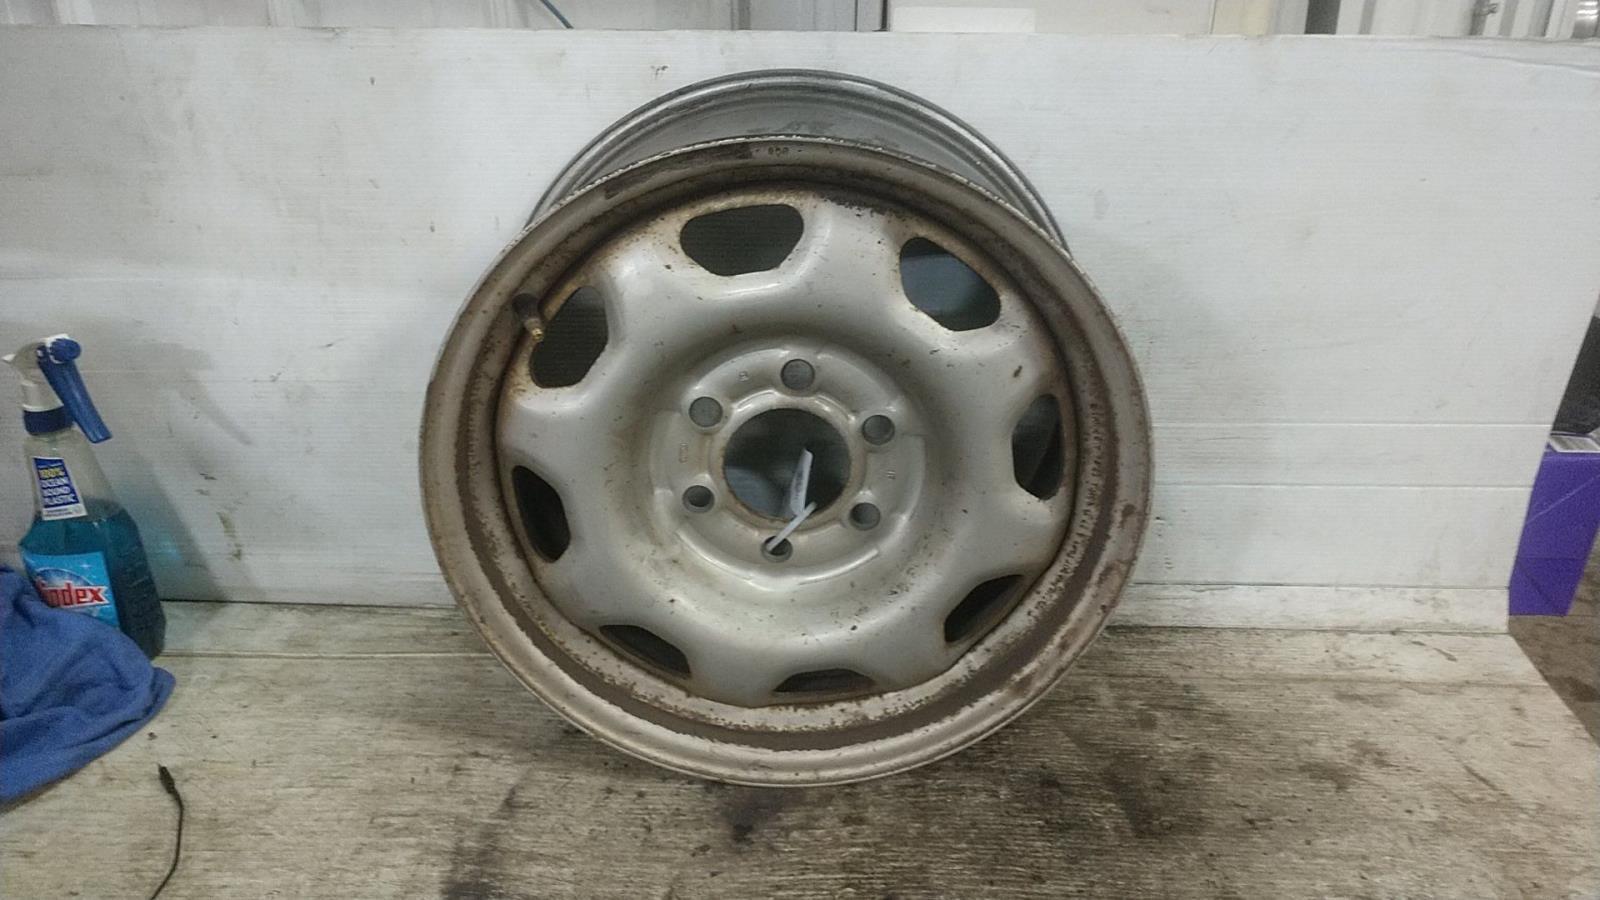 OEM (1) Wheel Rim For Ford F150 Pickup Steel Rusty